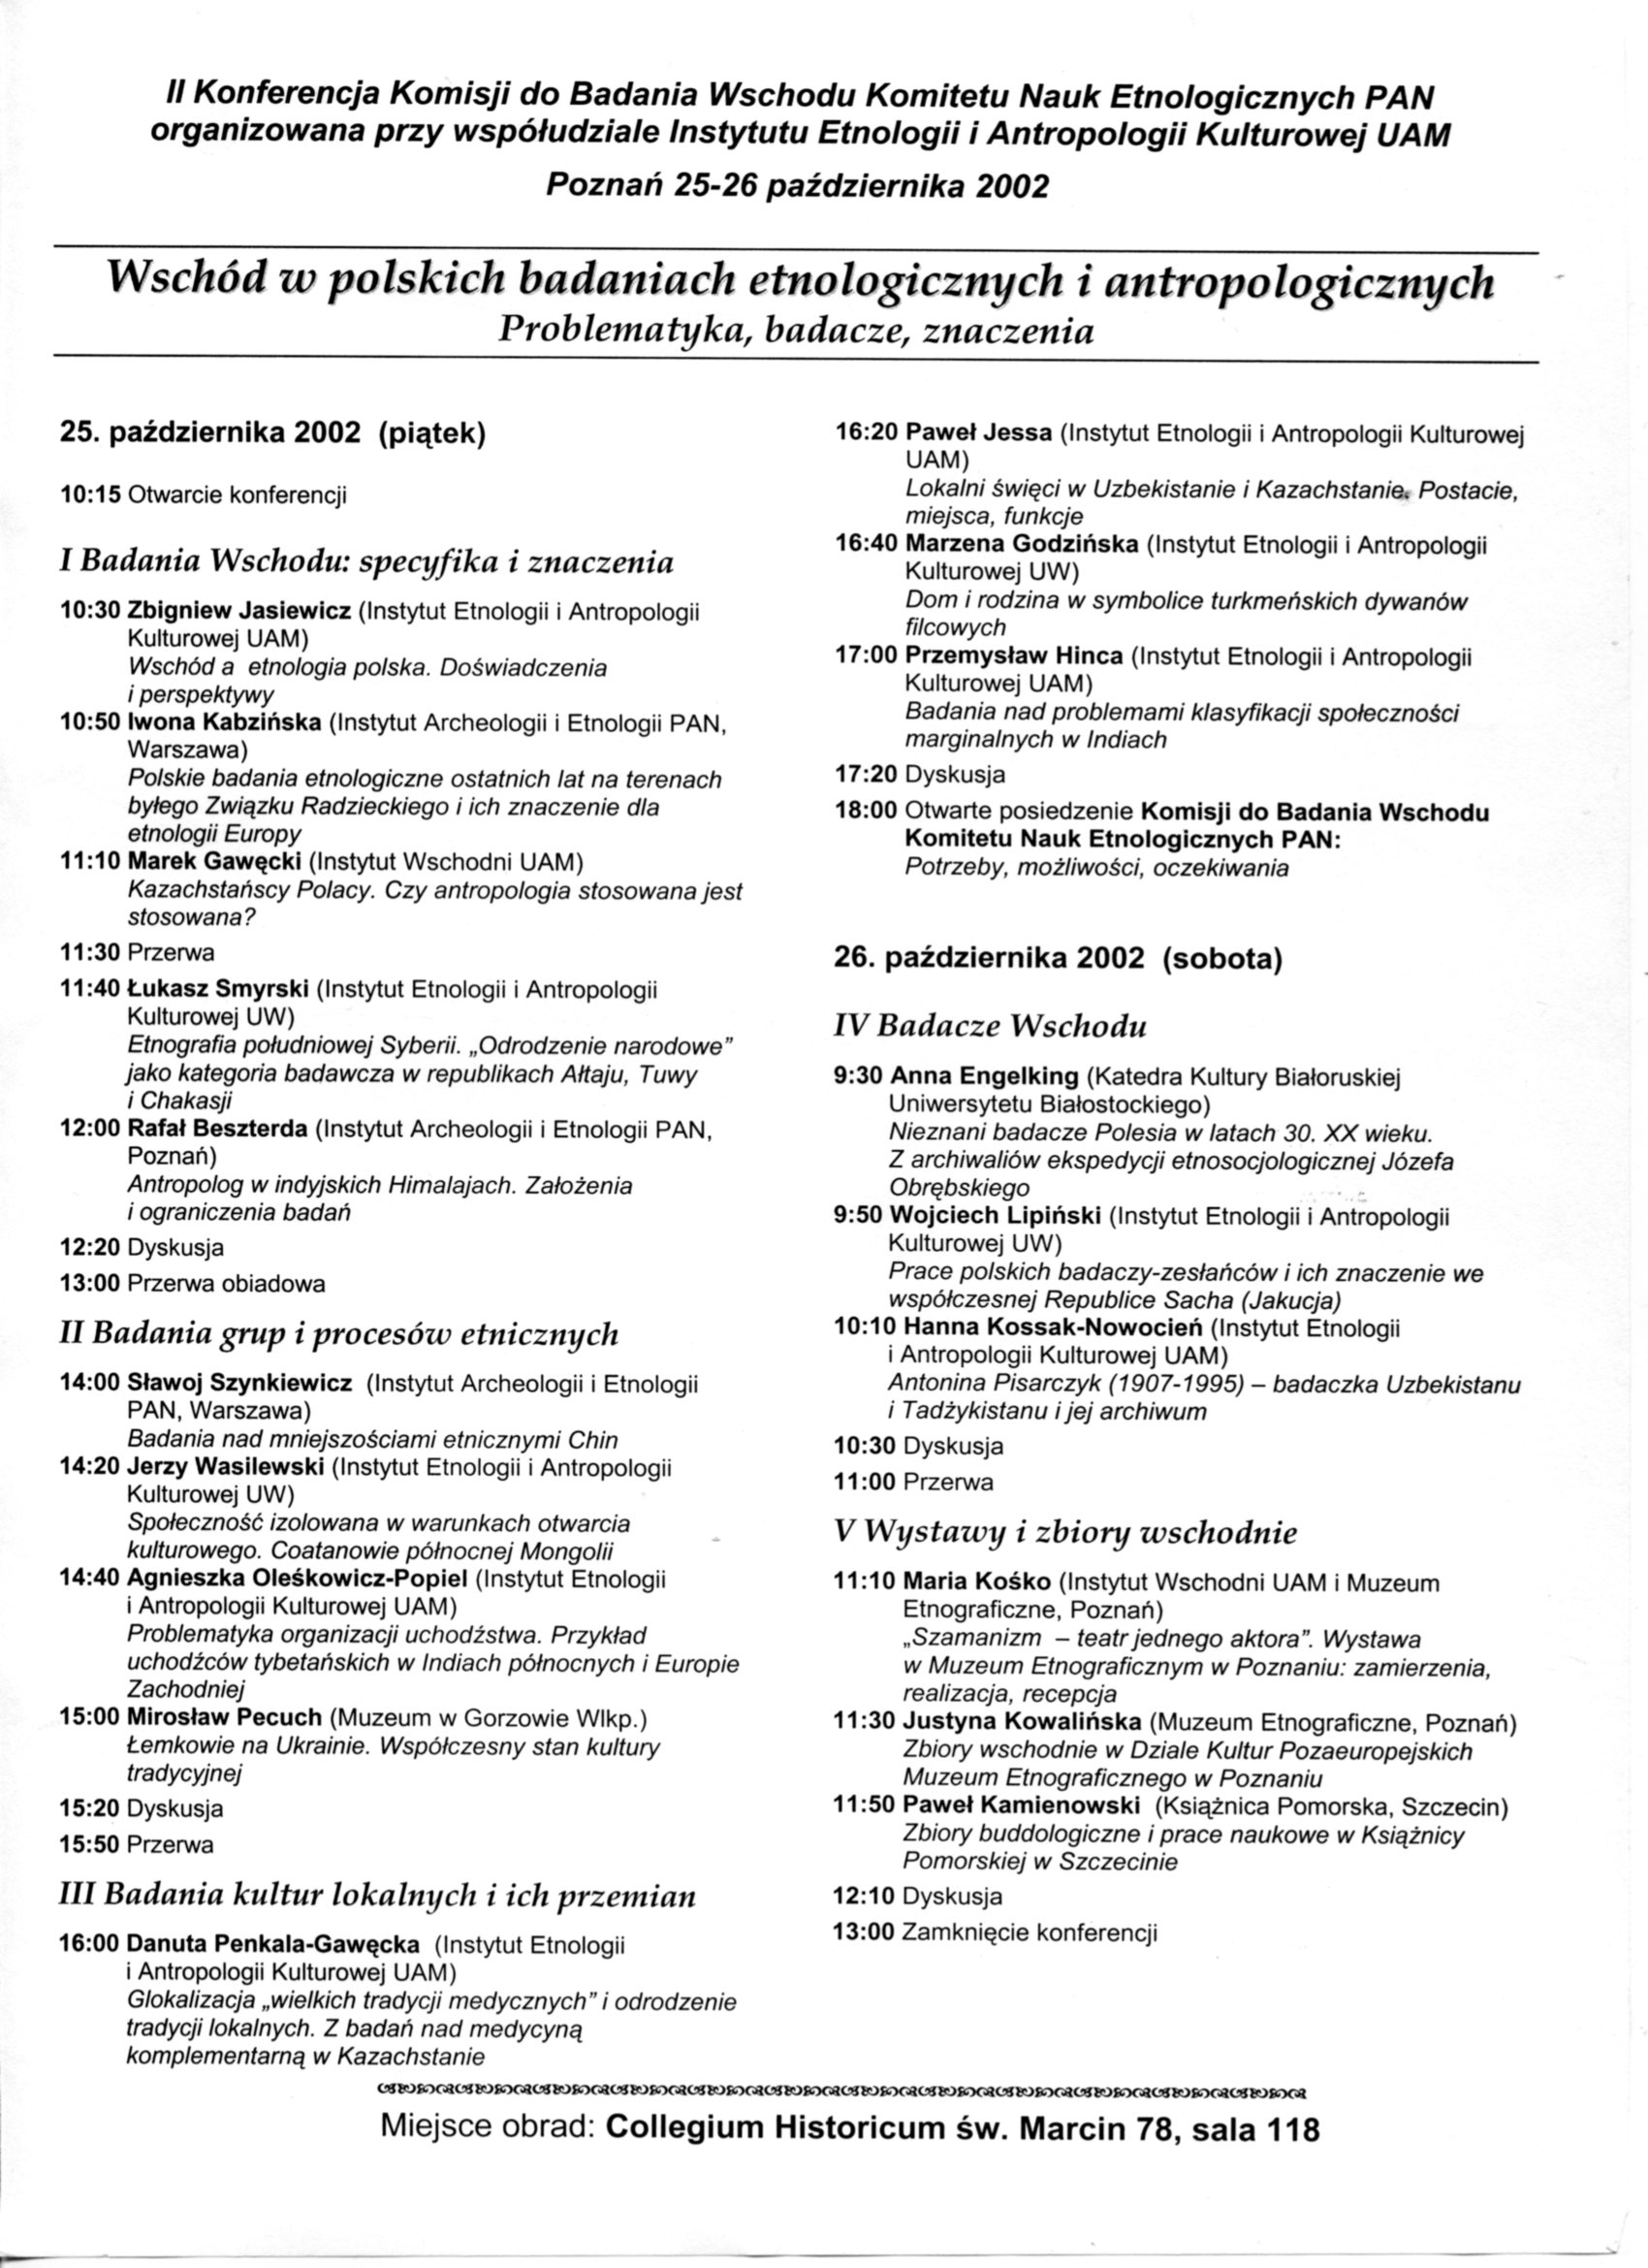 konferencja-2002-Poznan-program-001